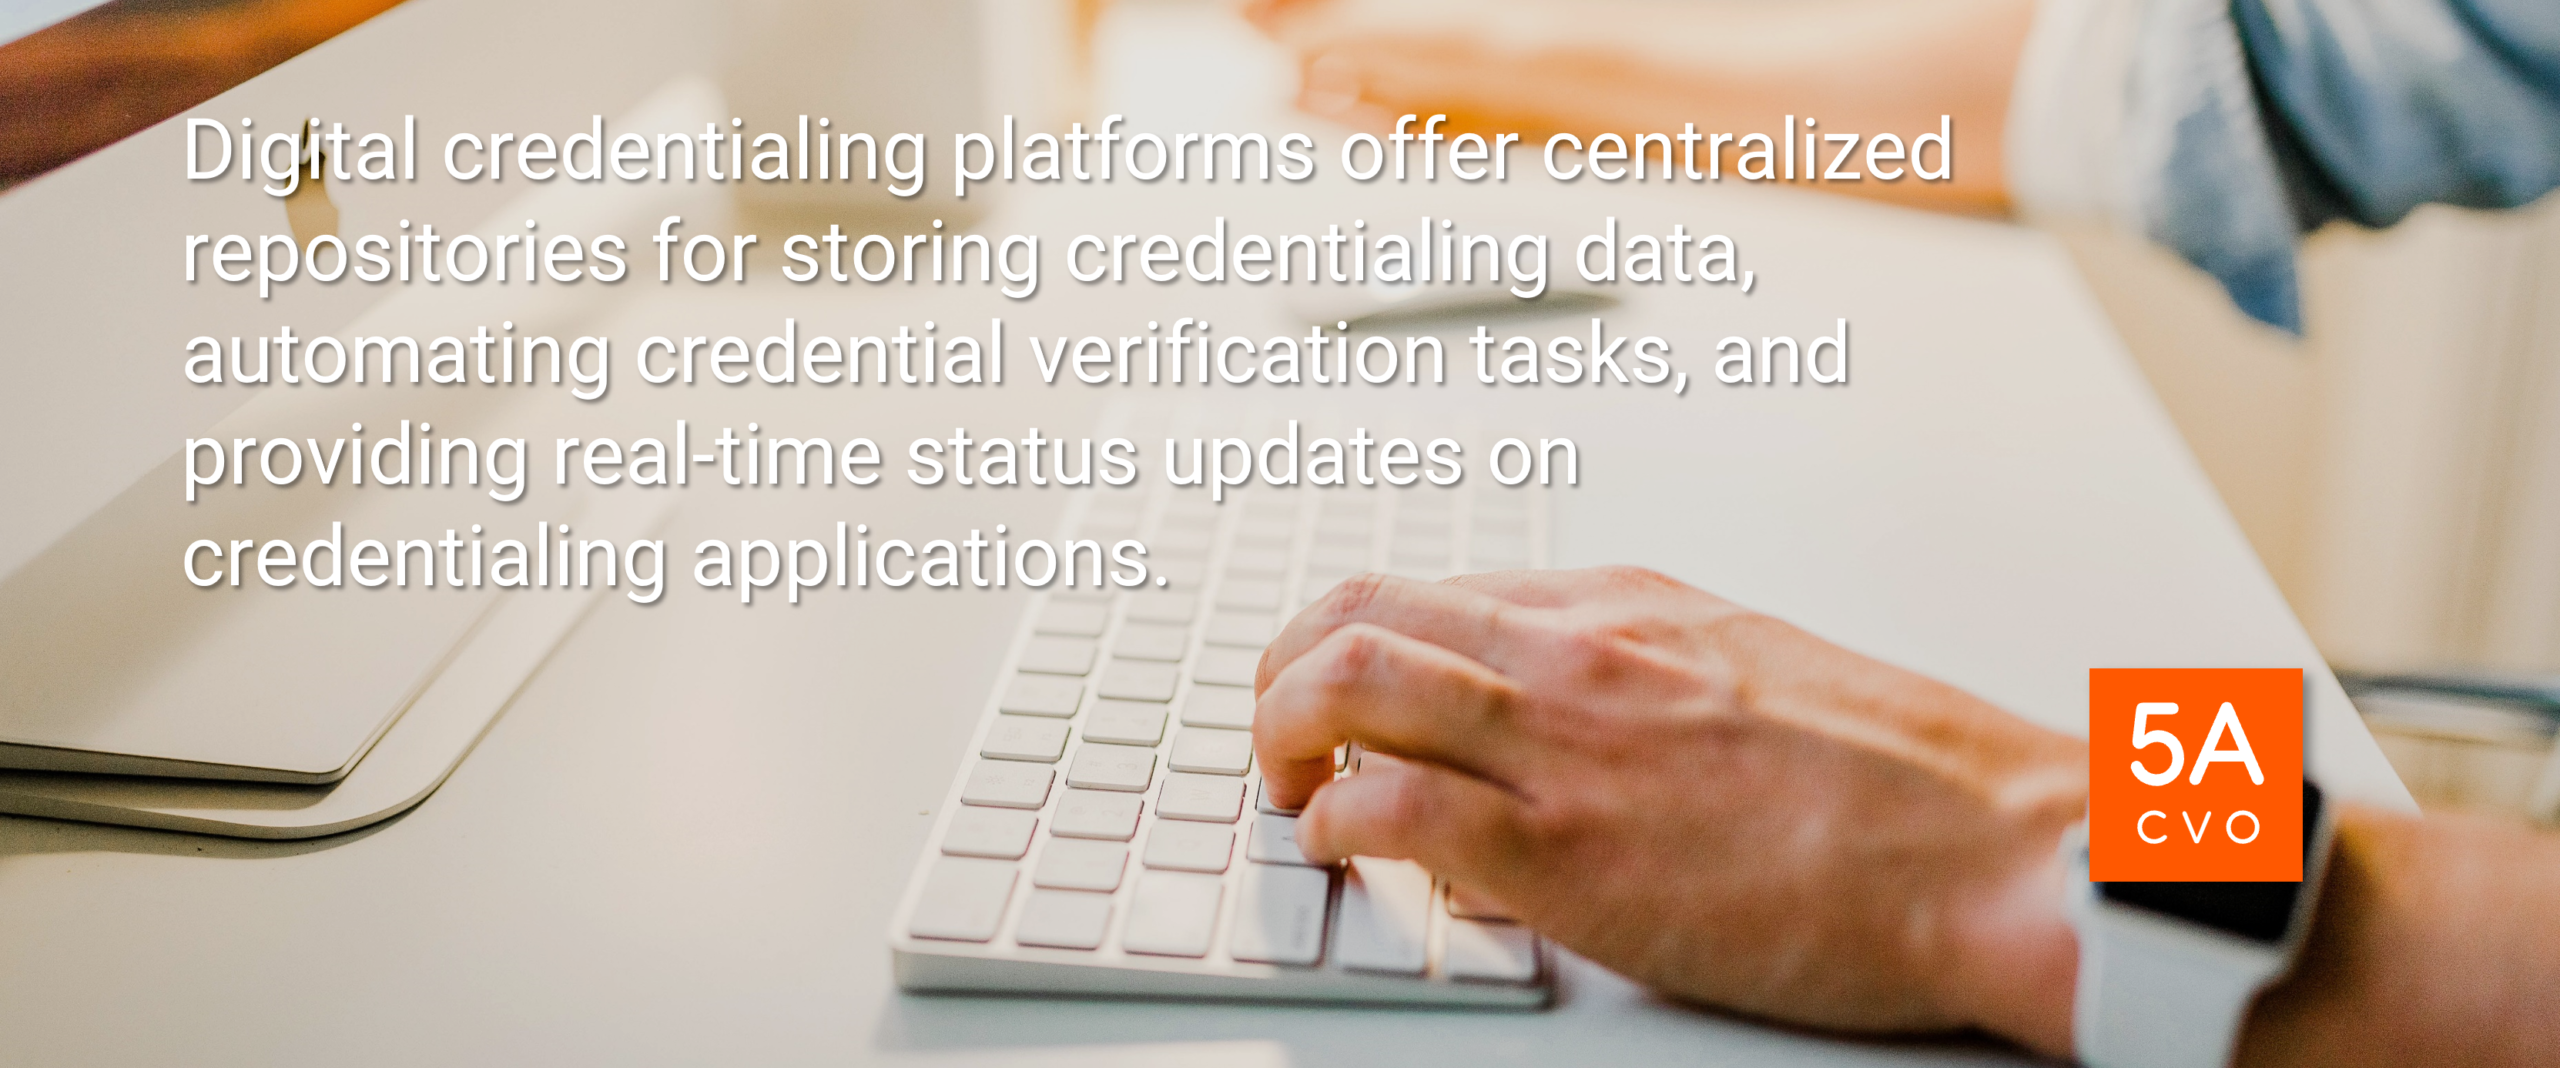 Digital Credentialing Platforms